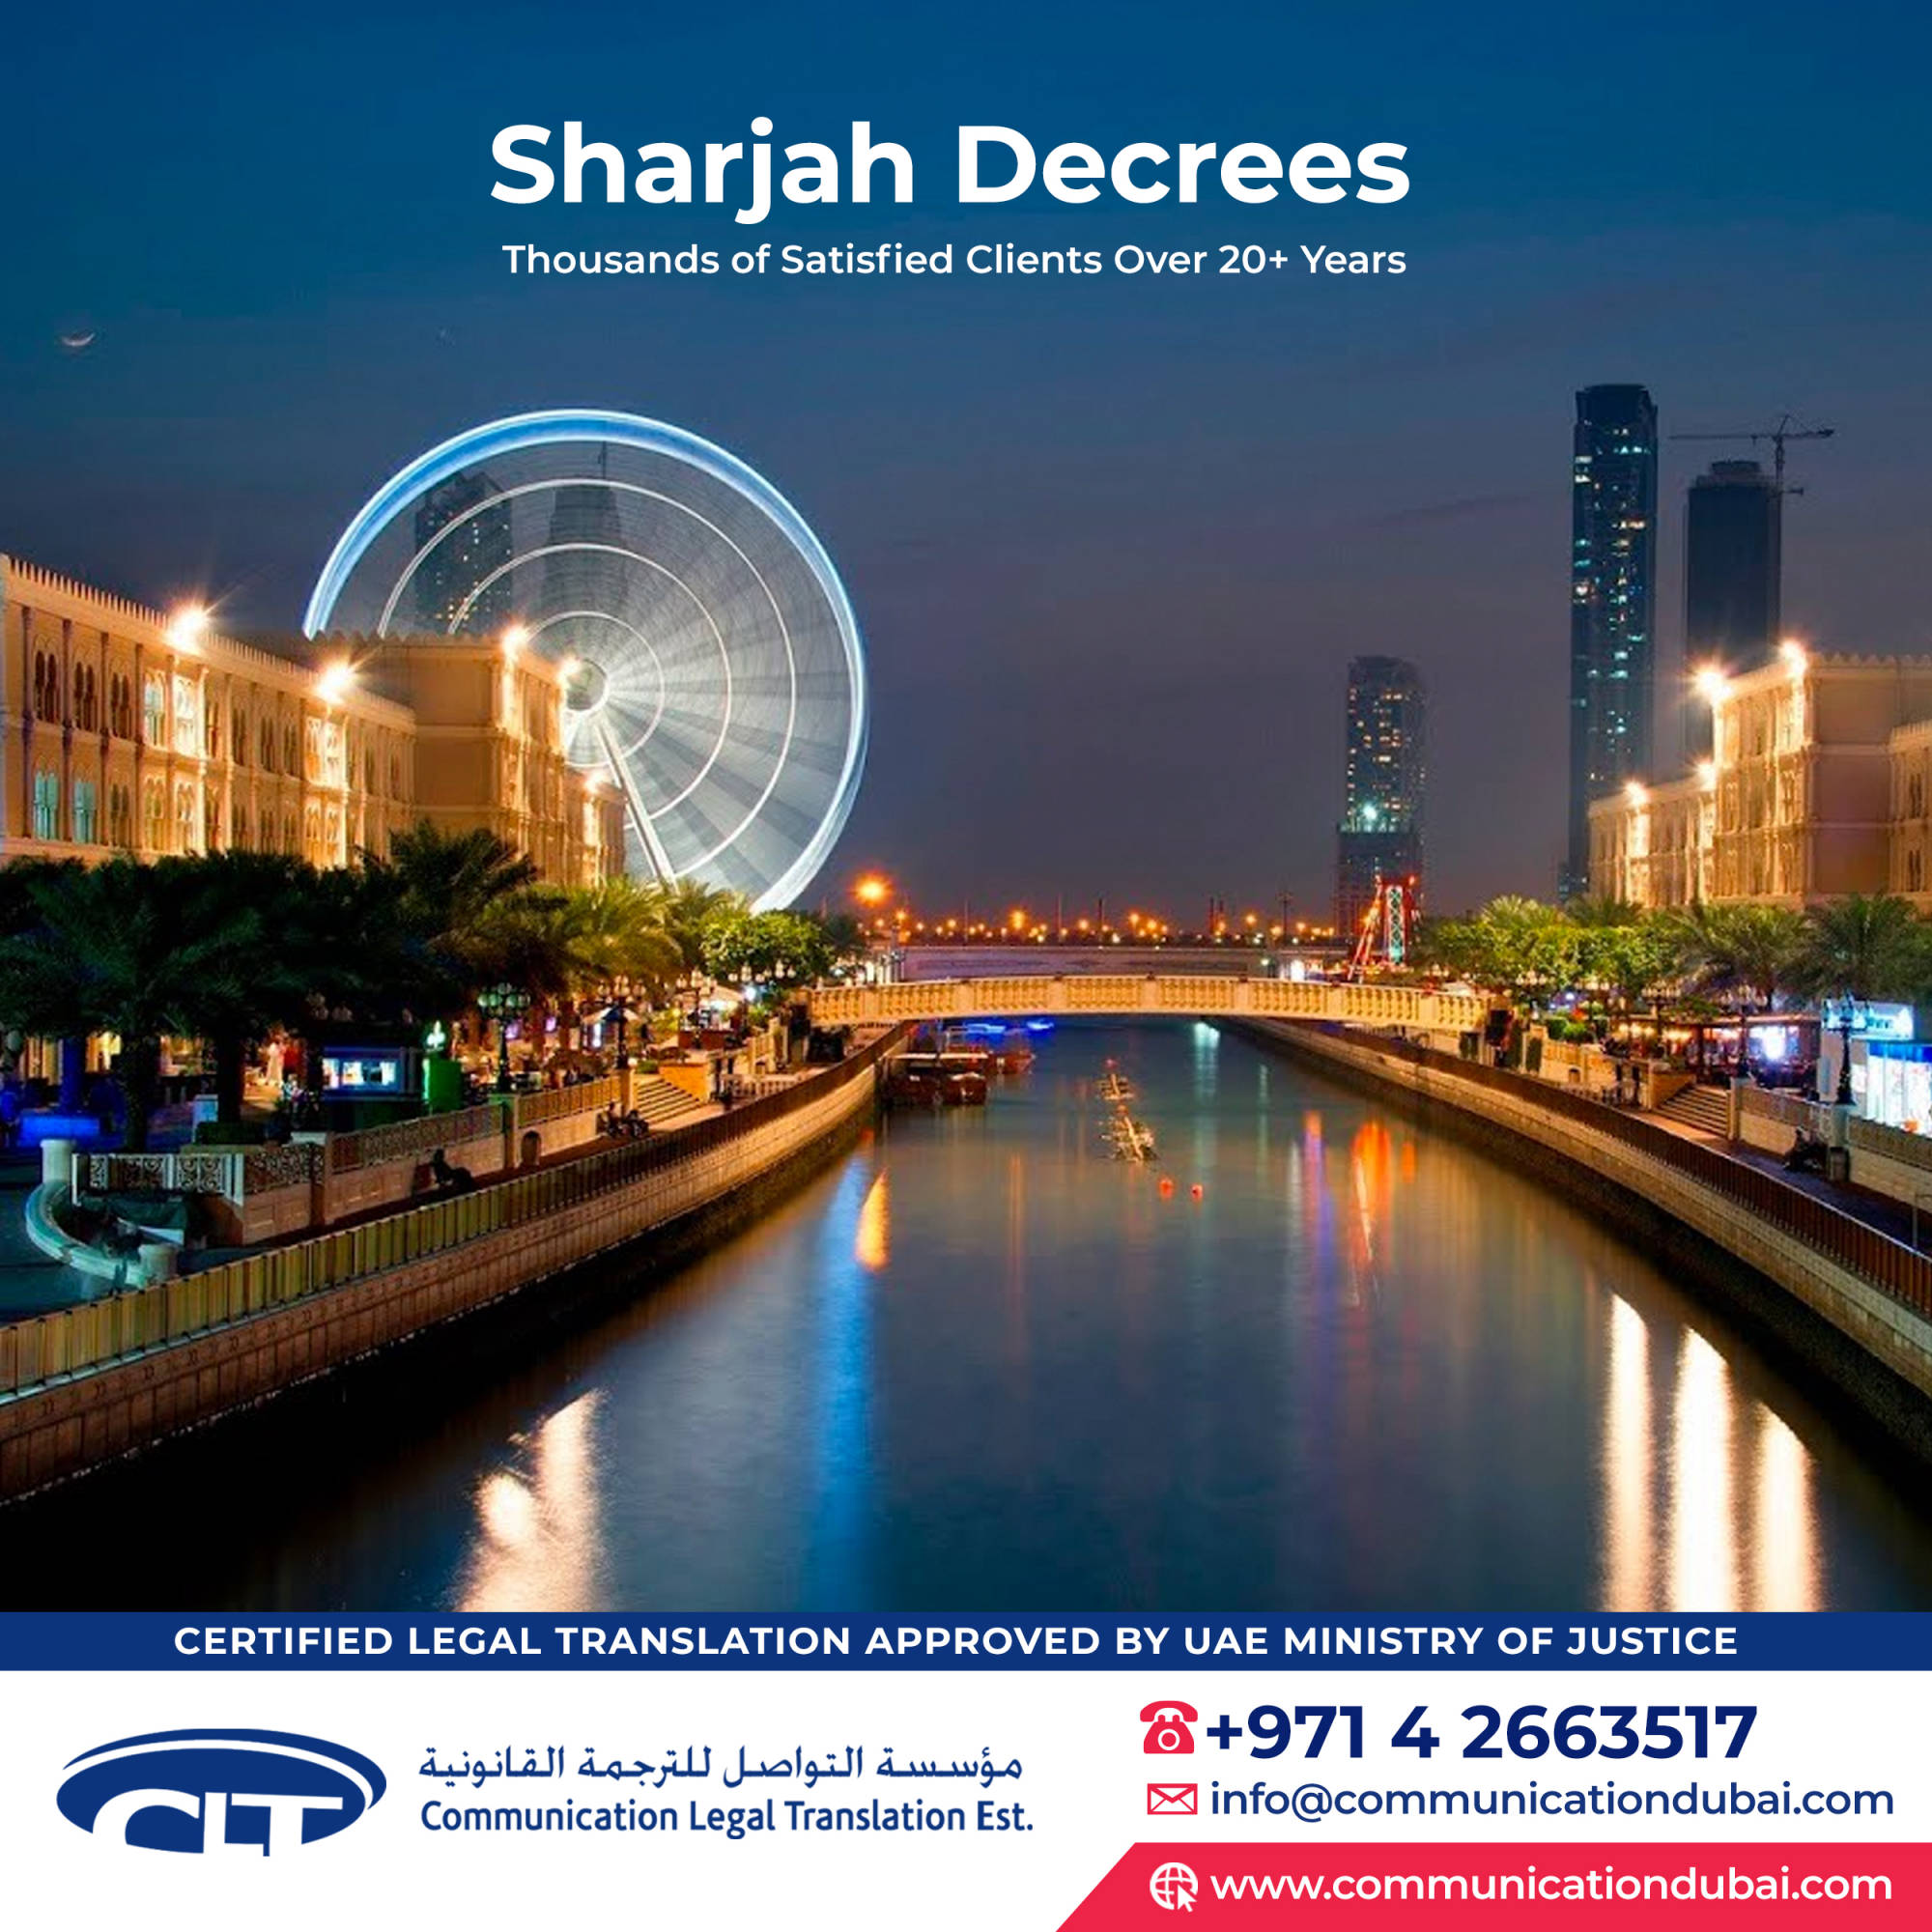 Sharjah Decrees 